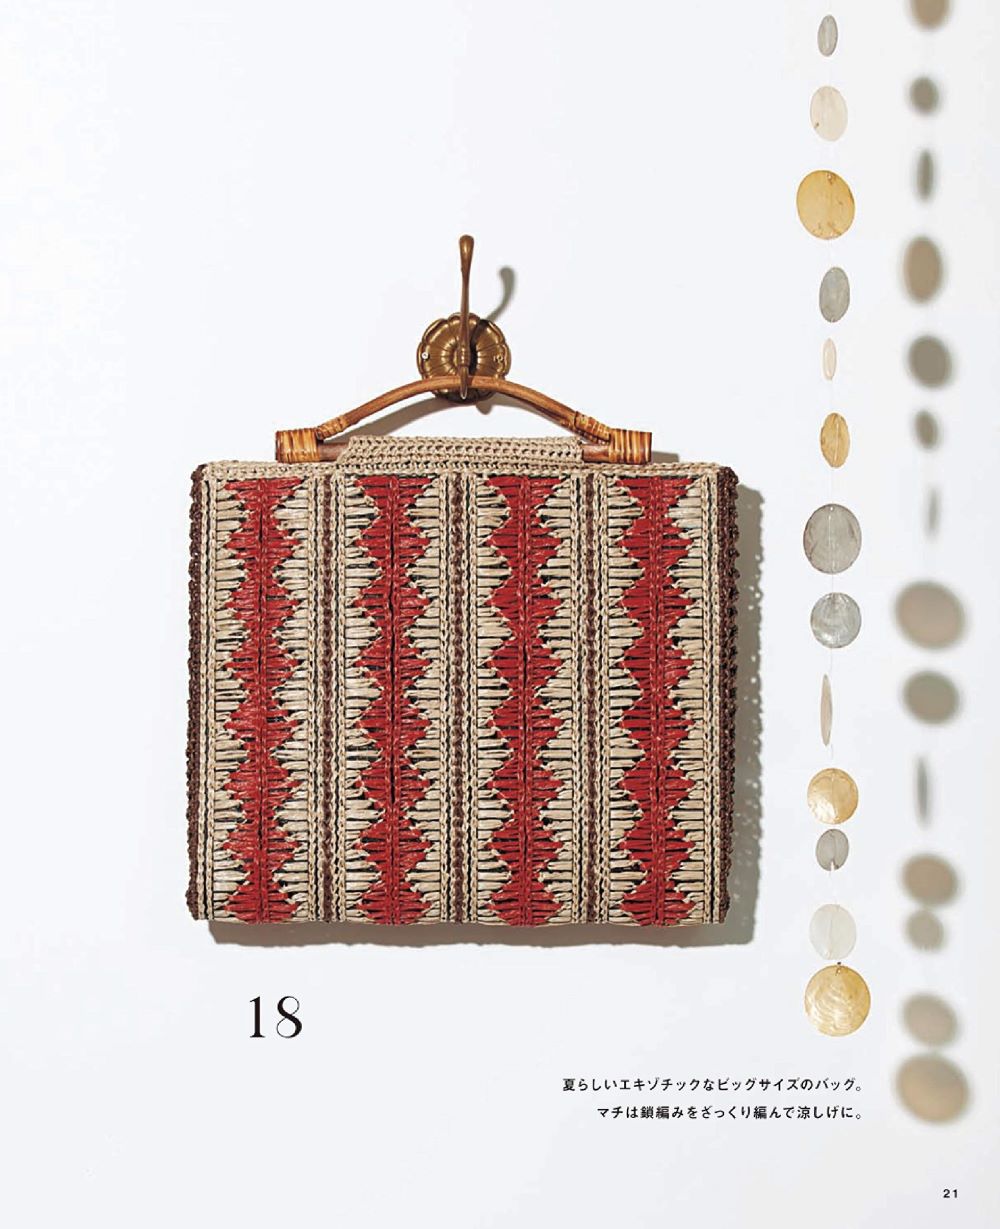 Easy-to-use bag of Ekoandariya to make wearing knitted to the net